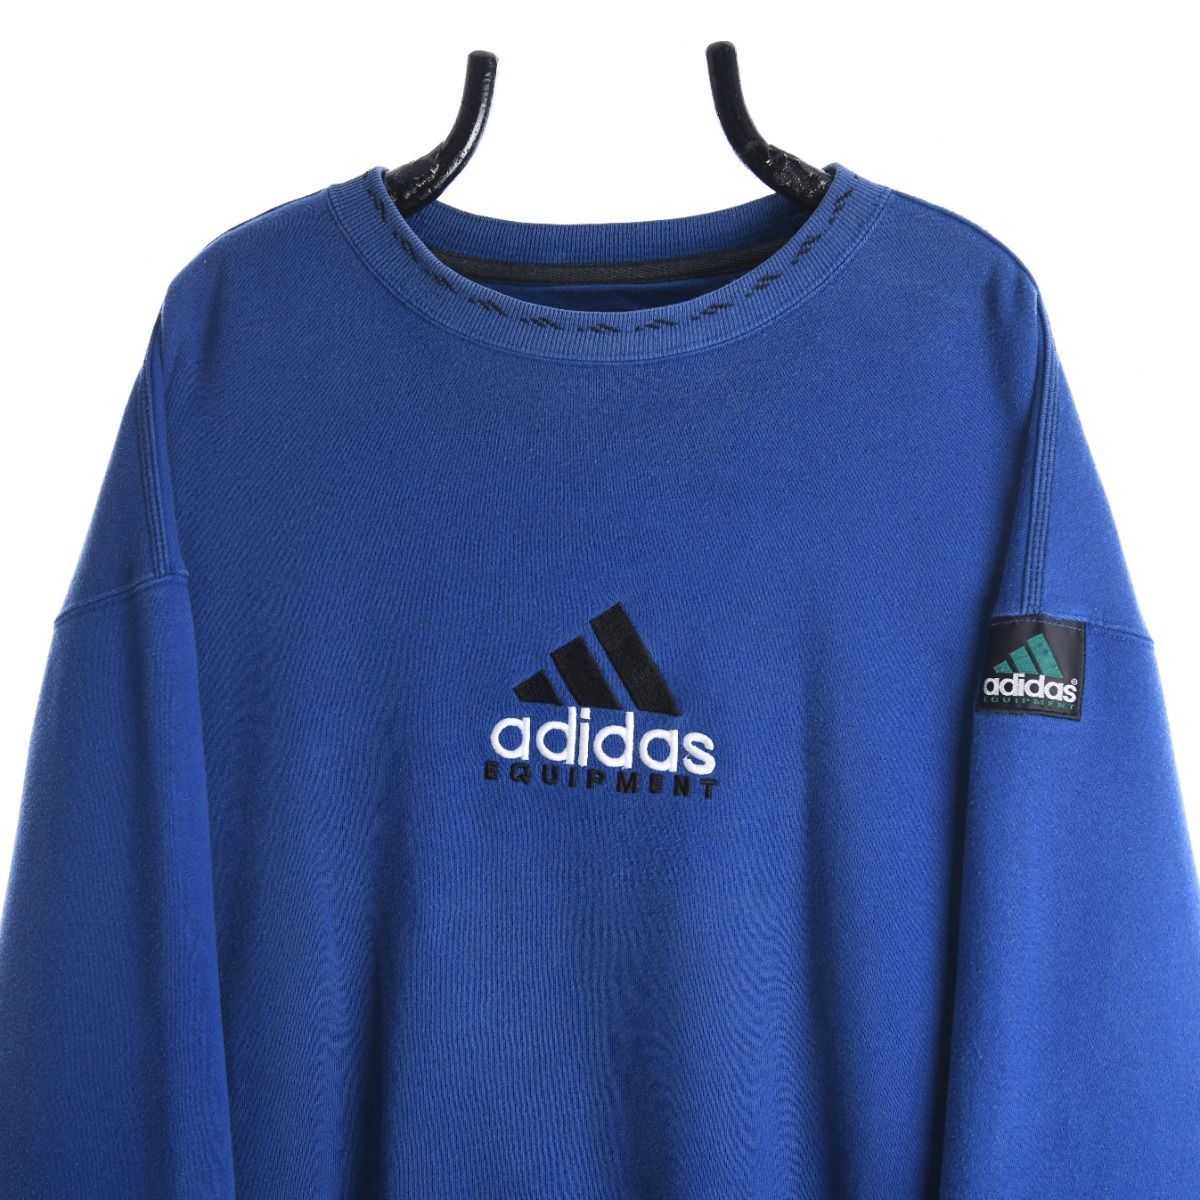 Adidas Equipment 1990s Sweatshirt